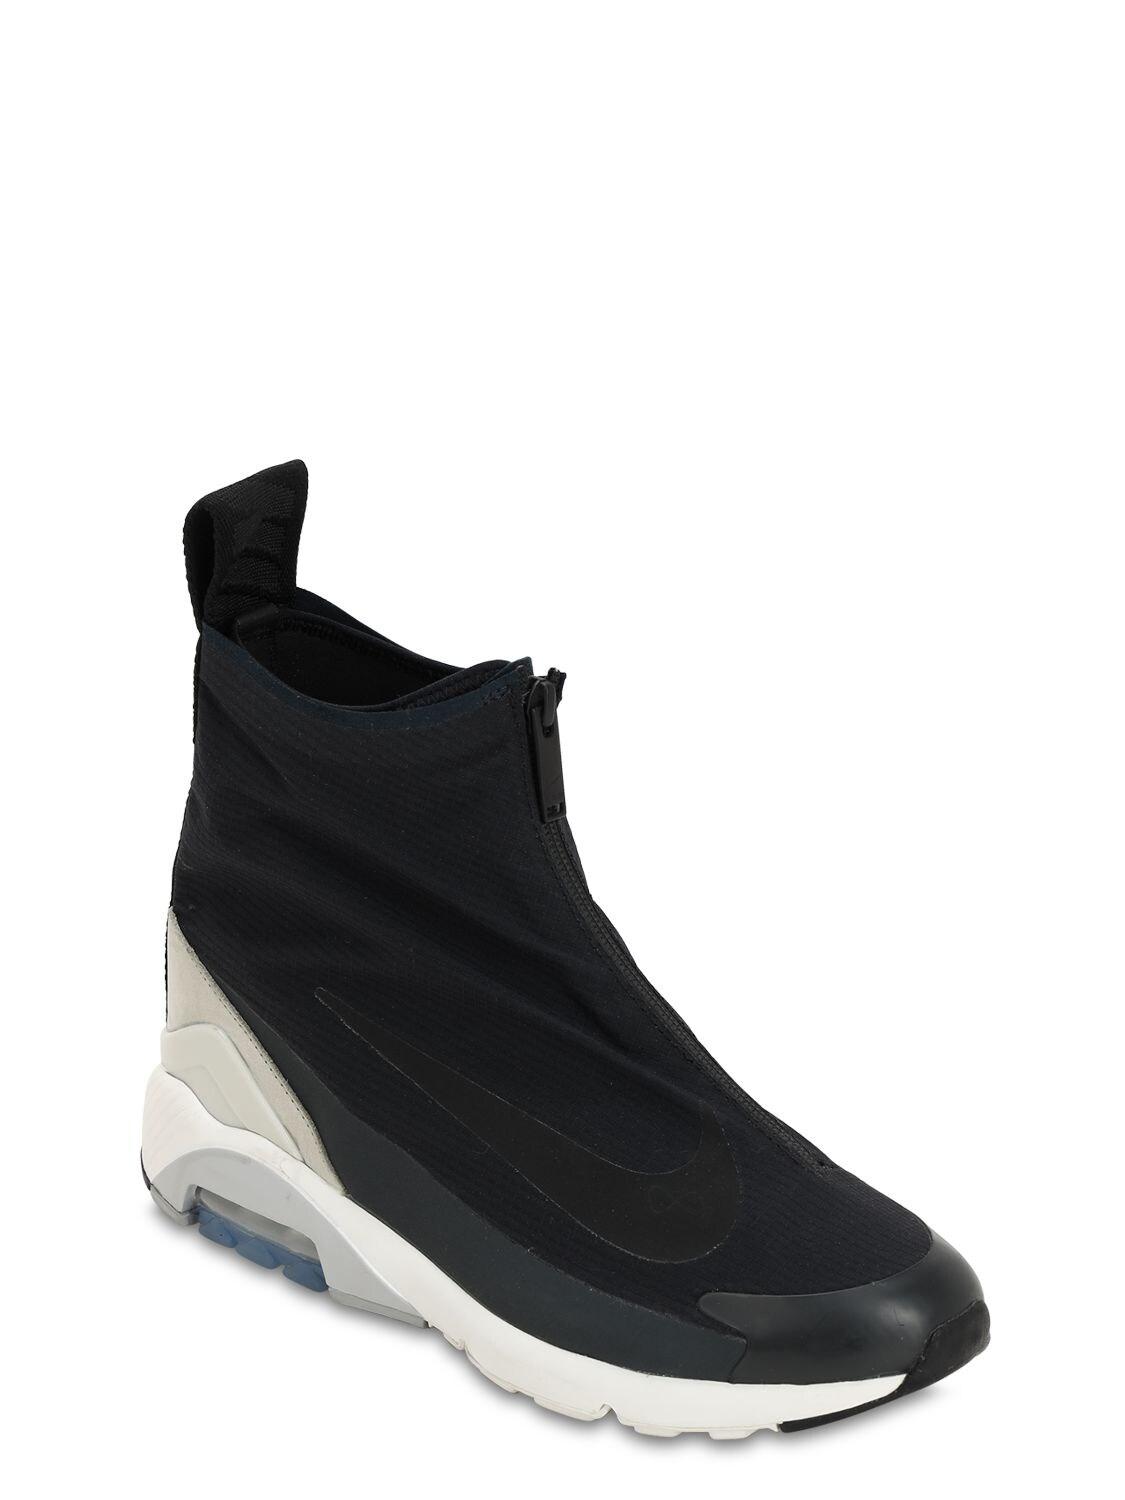 Nike X Ambush® Air Max 180 Hi Sneakers in Black | Lyst